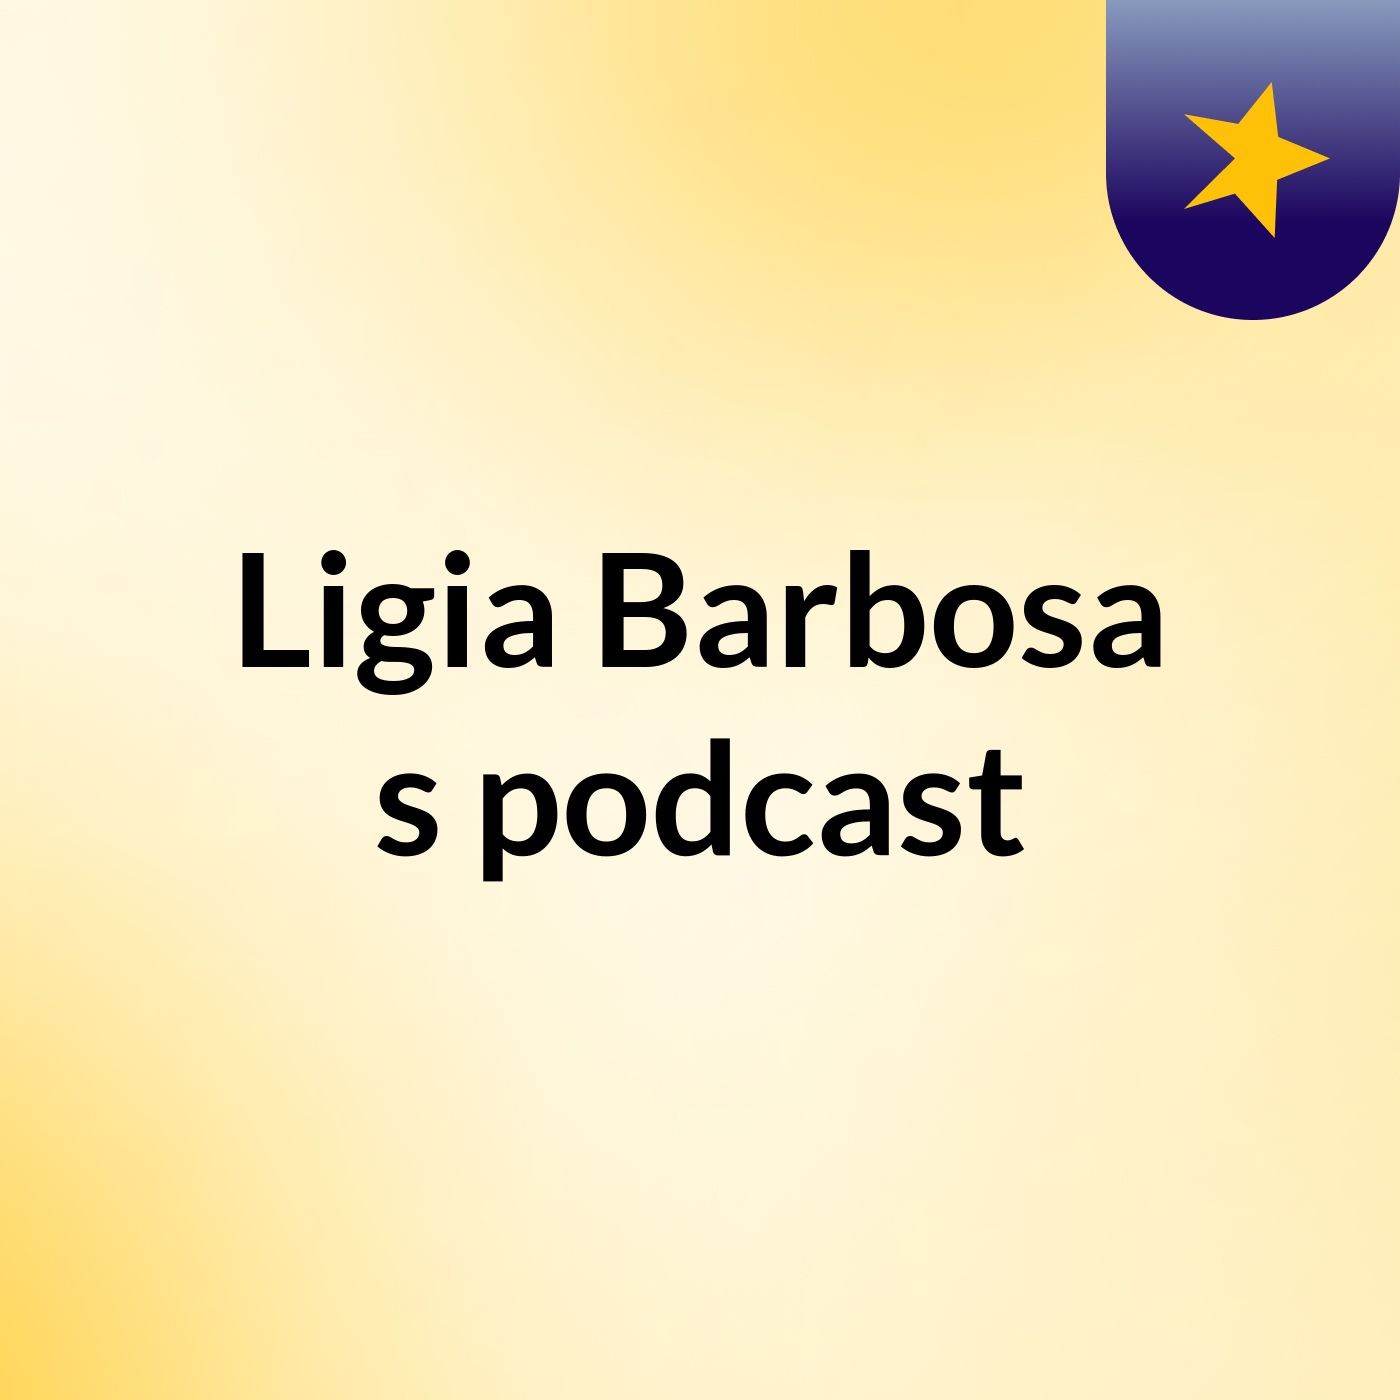 Ligia Barbosa's podcast